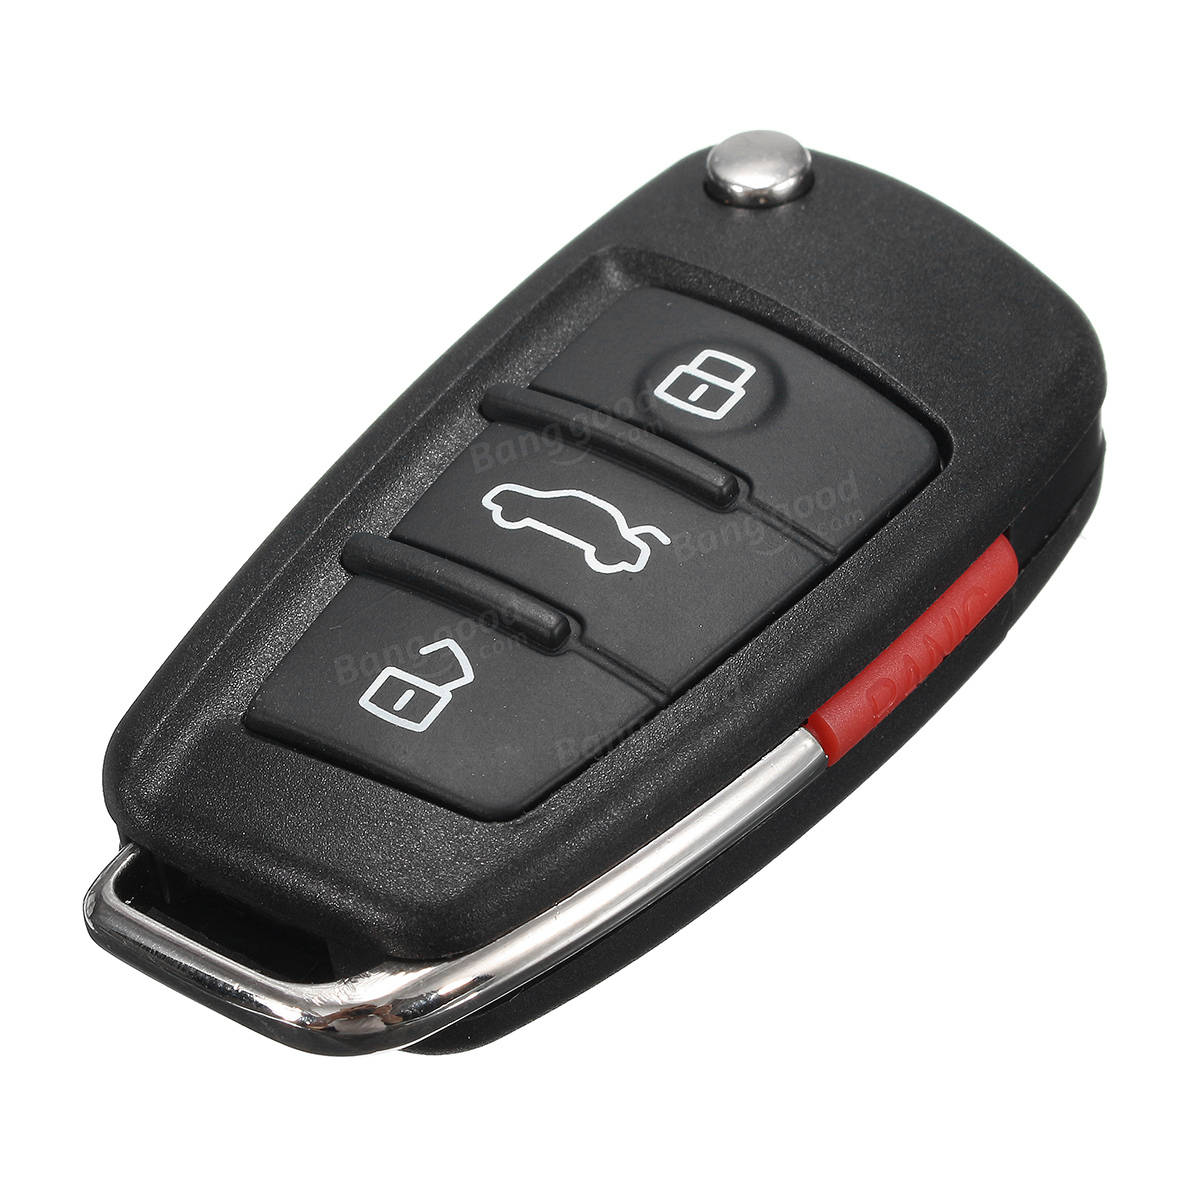 New 3+1 Buttons Remote Key Fob Case Uncut Blade For Audi A6 A4 A2 A8 TT Q7 Sale